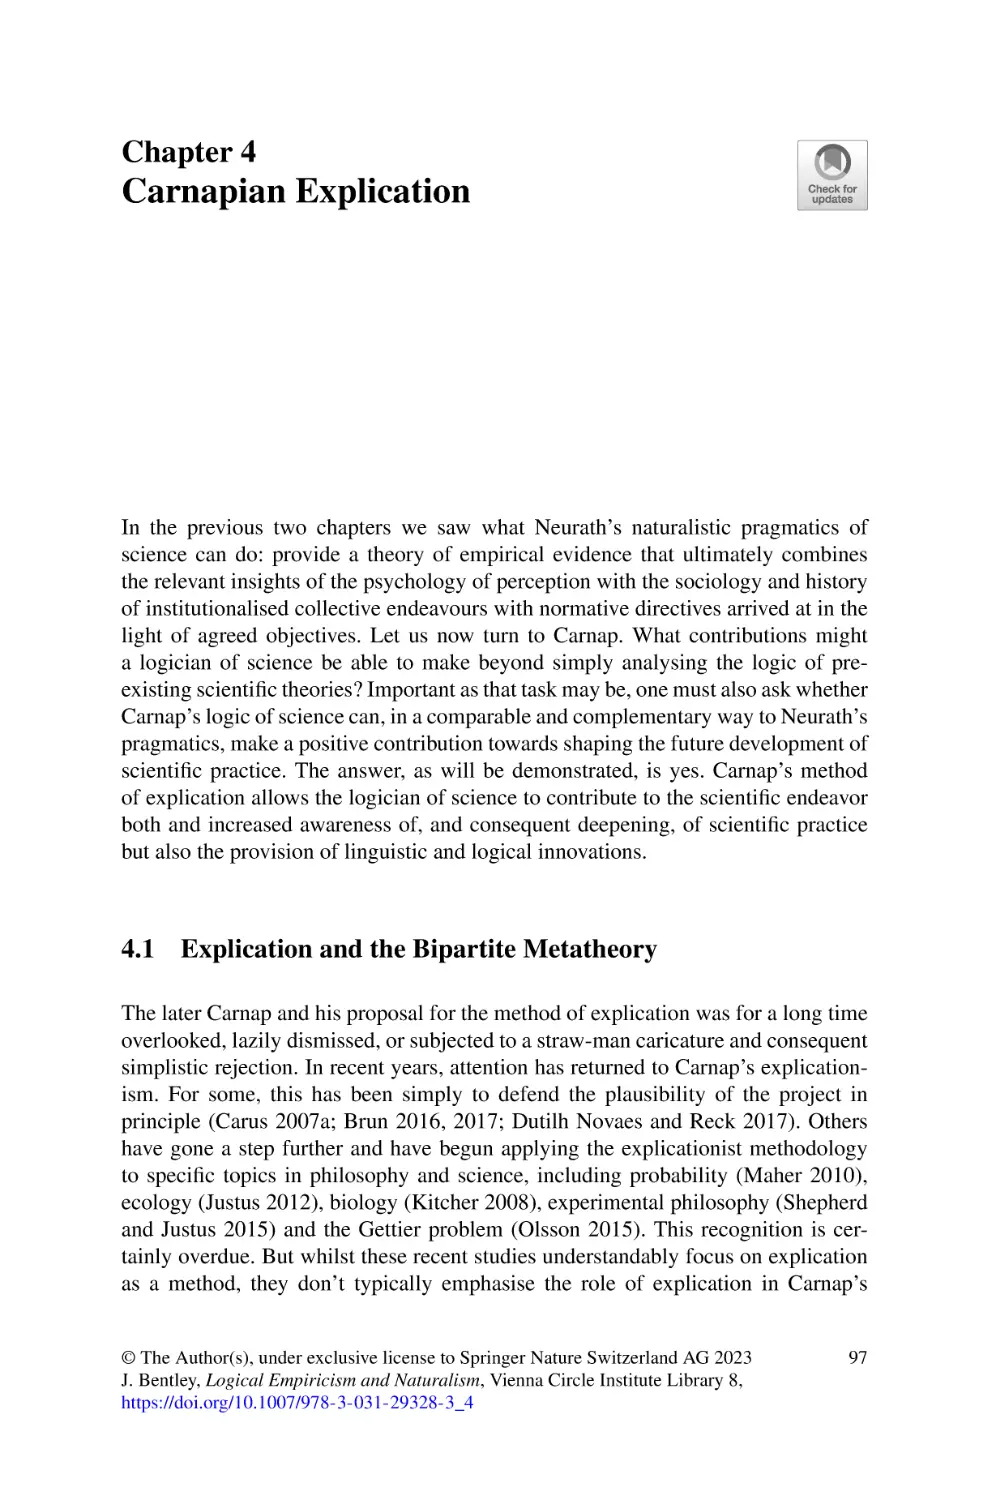 4 Carnapian Explication
4.1 Explication and the Bipartite Metatheory